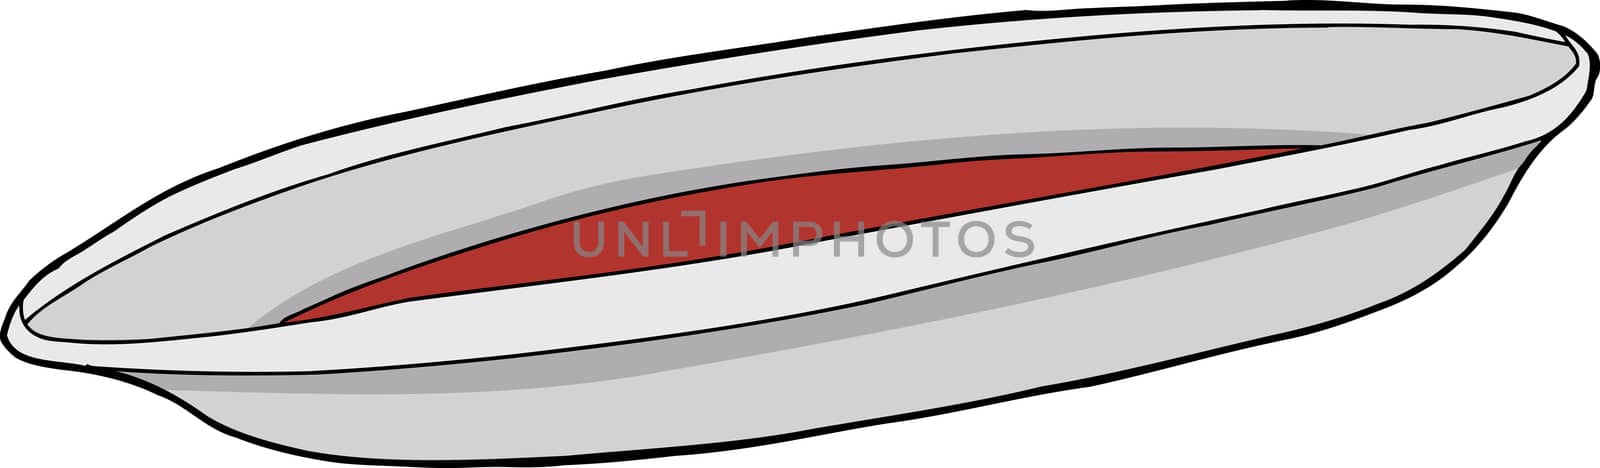 Chrome single cartoon plate over isolated background